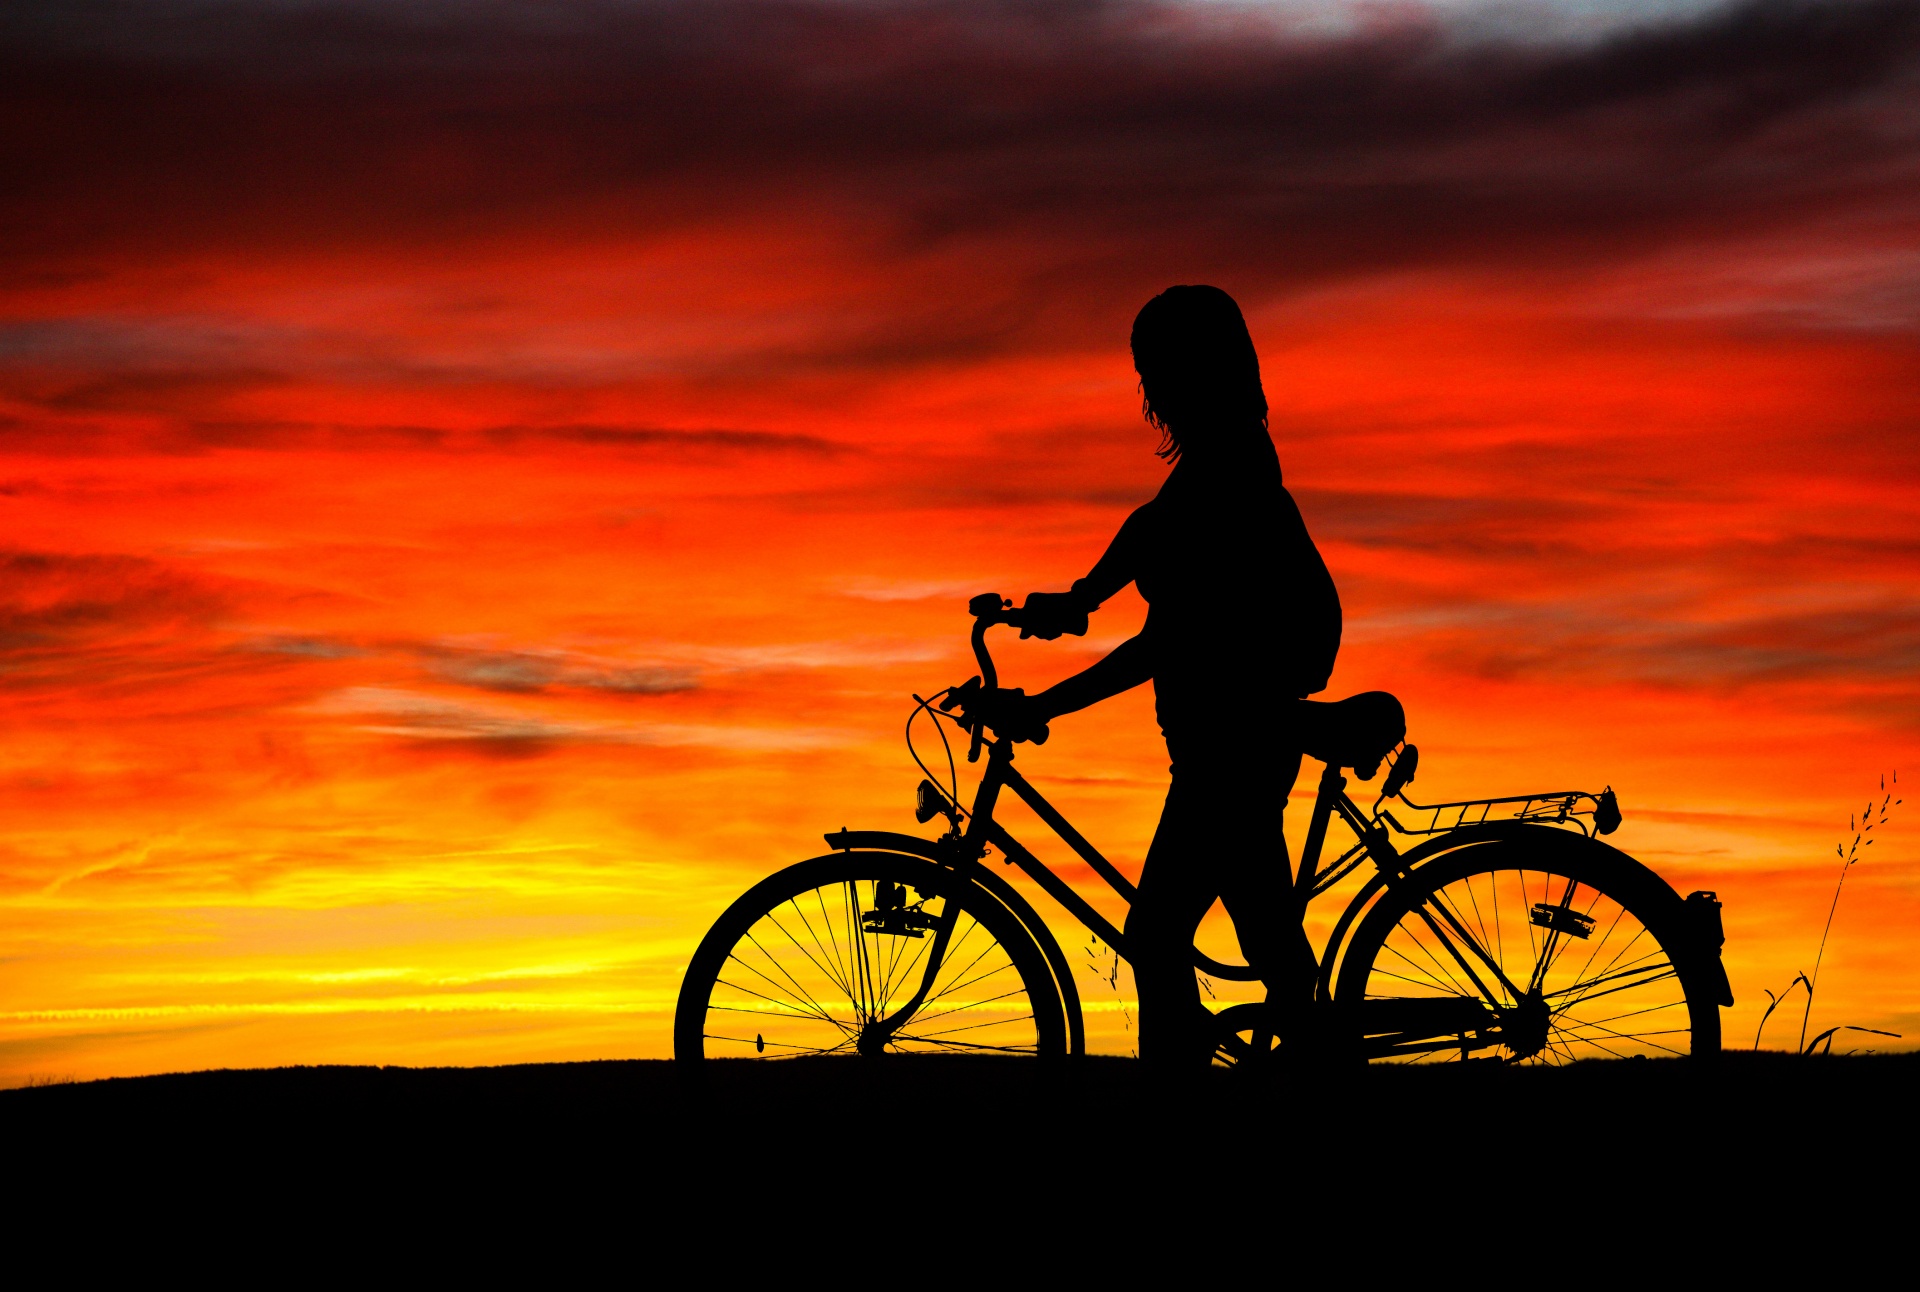 Sunset & bicycle photo